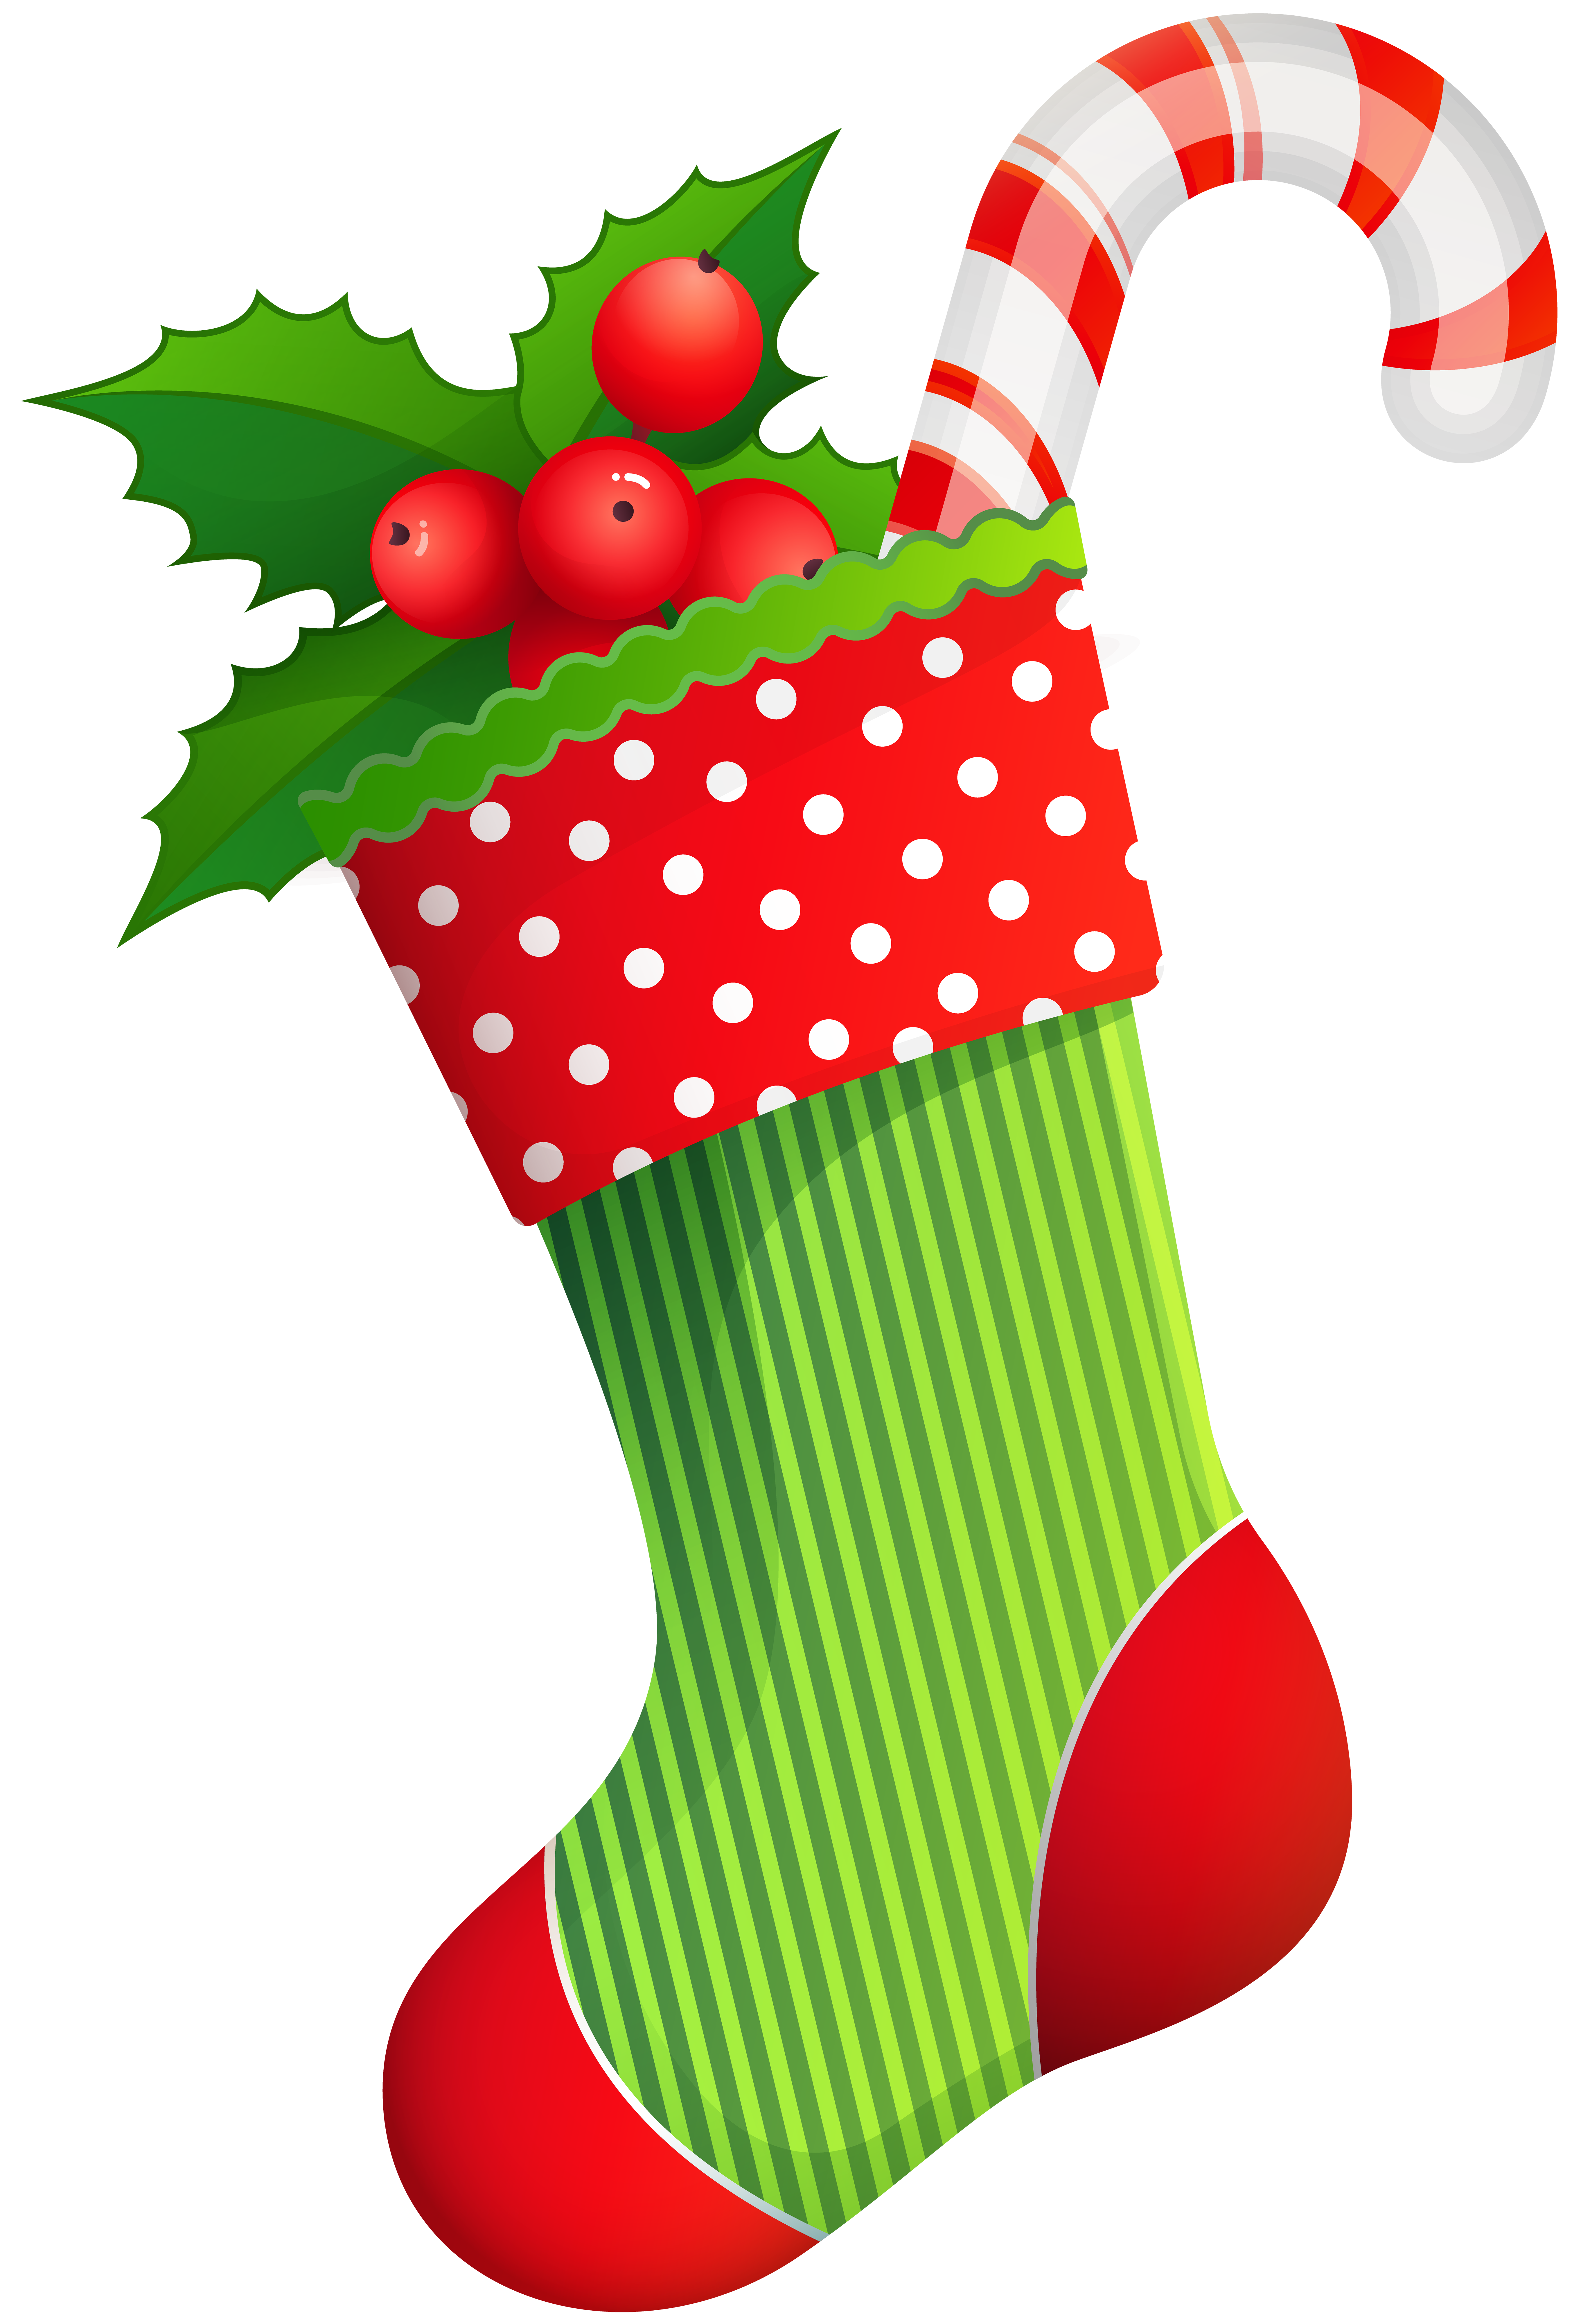 clip art christmas stocking